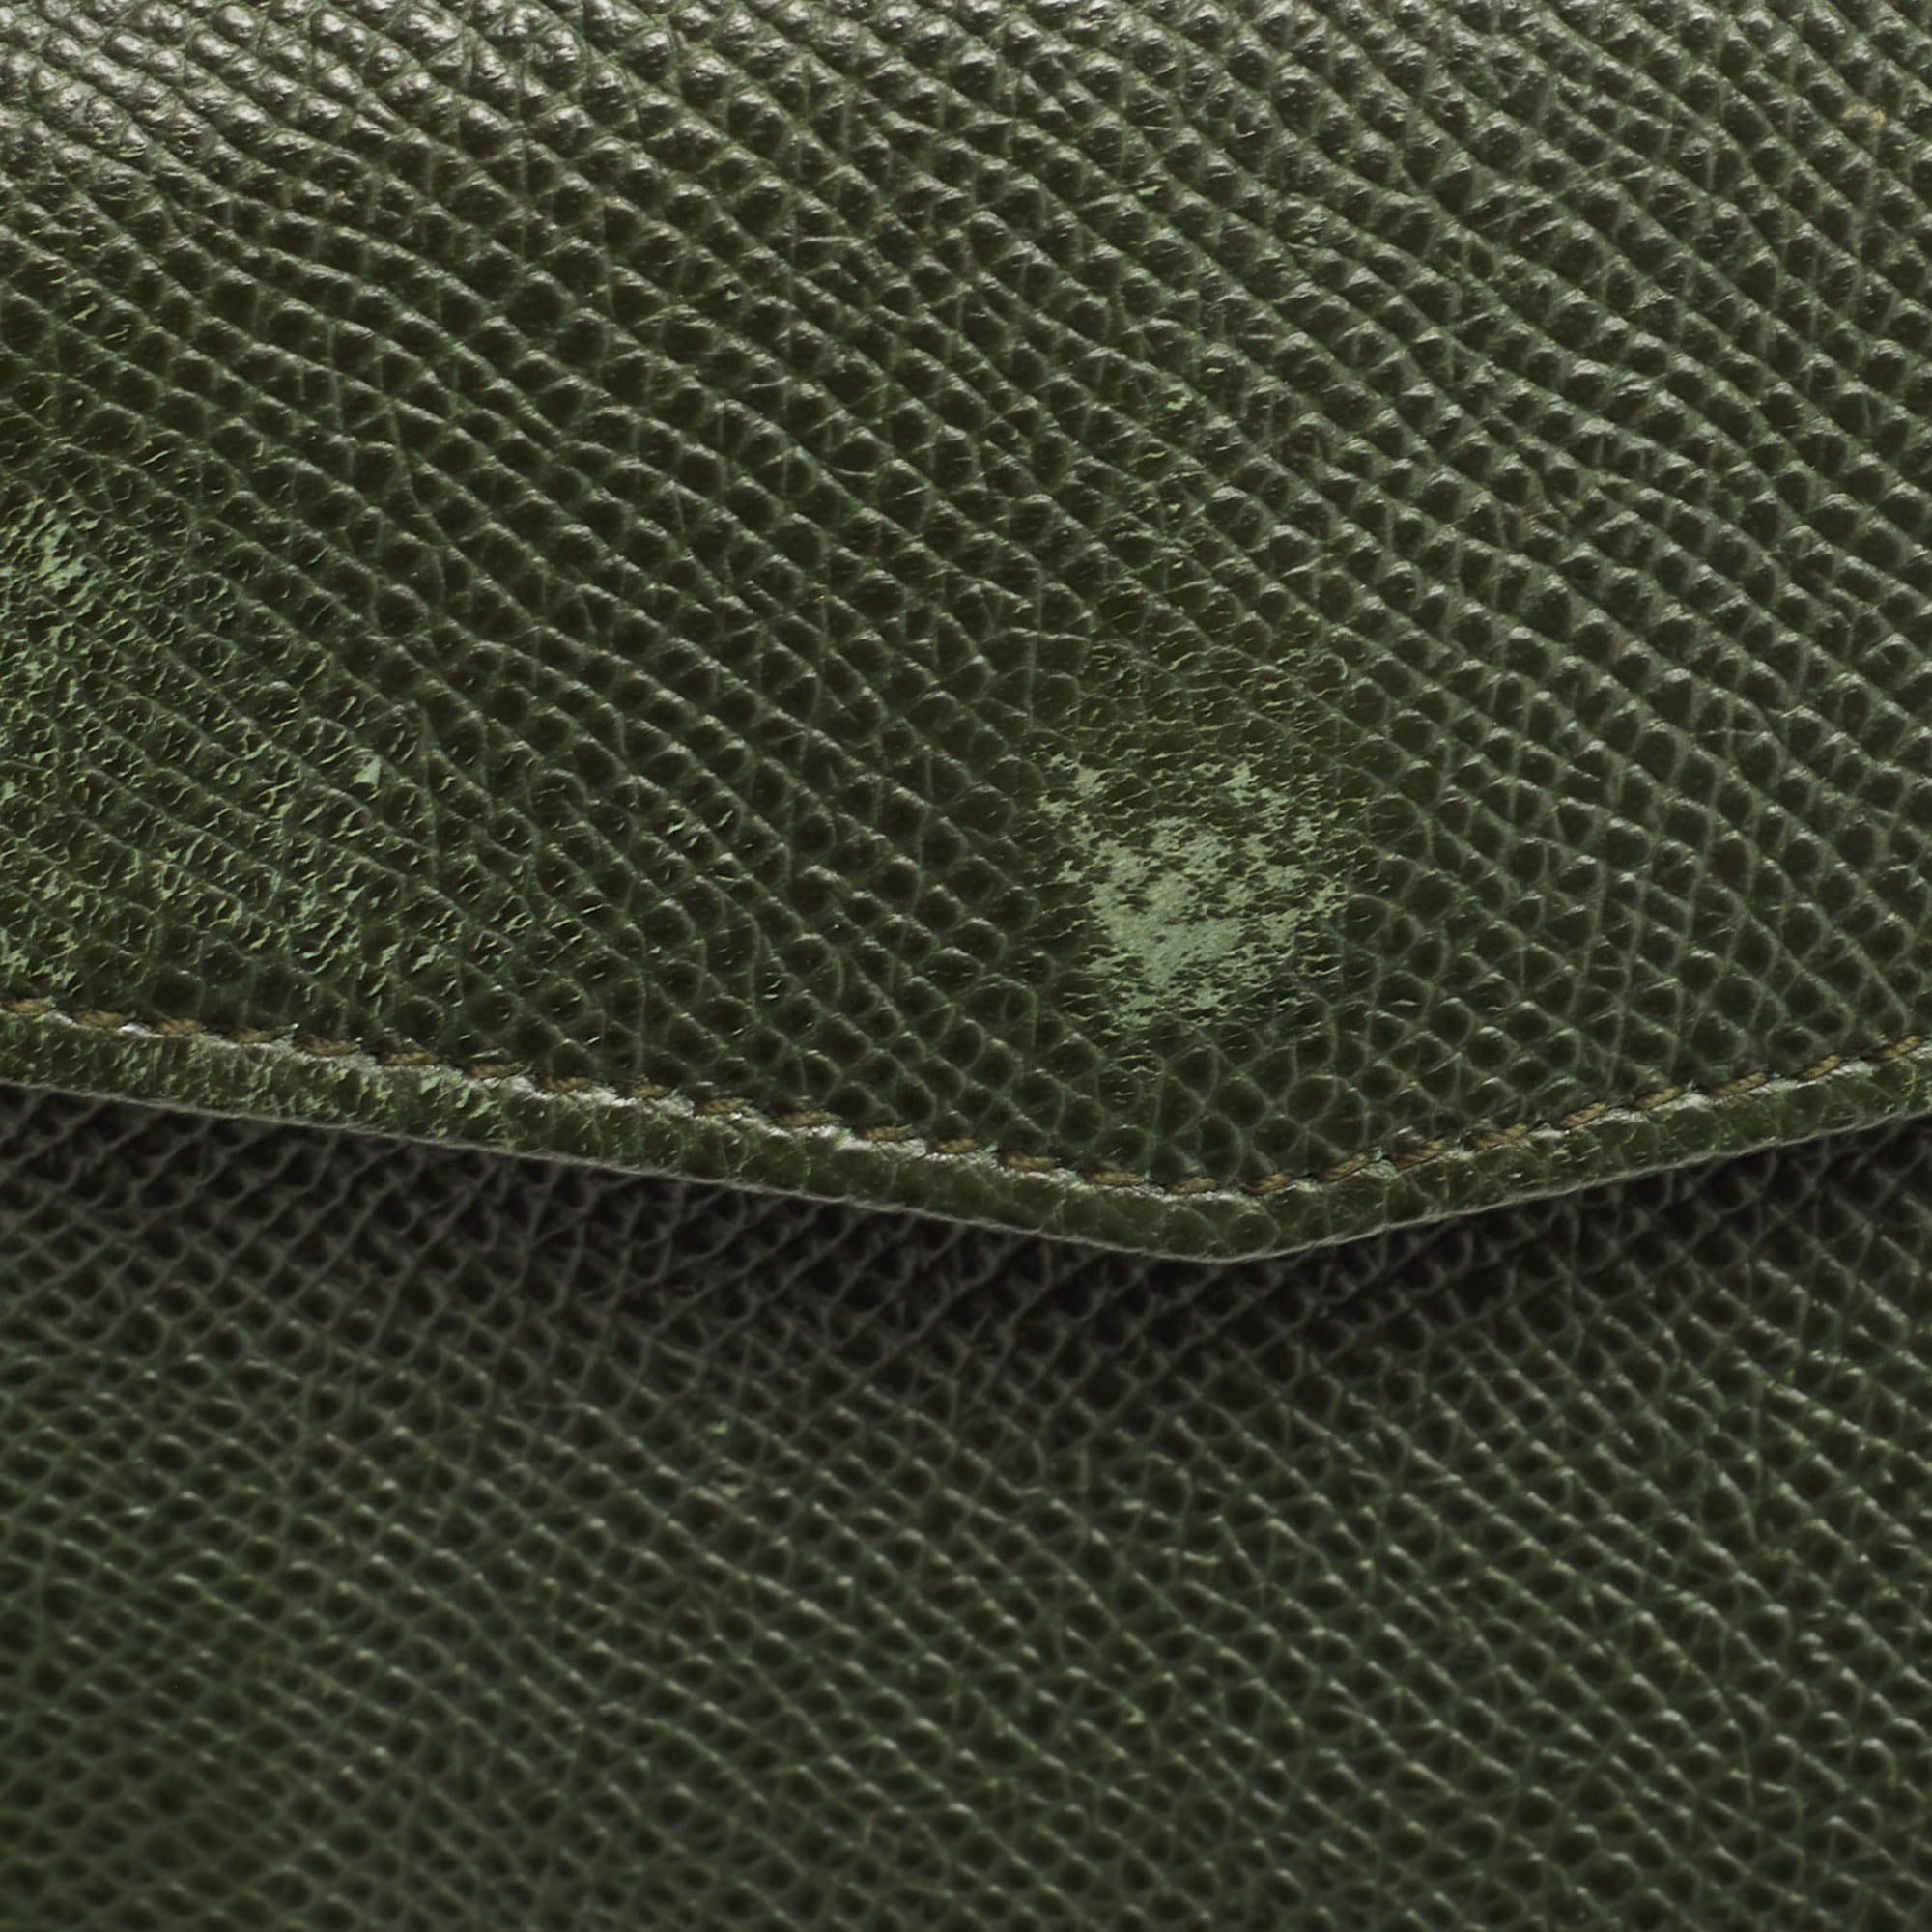 Dolce & Gabbana Green Leather Logo Bifold Compact Wallet